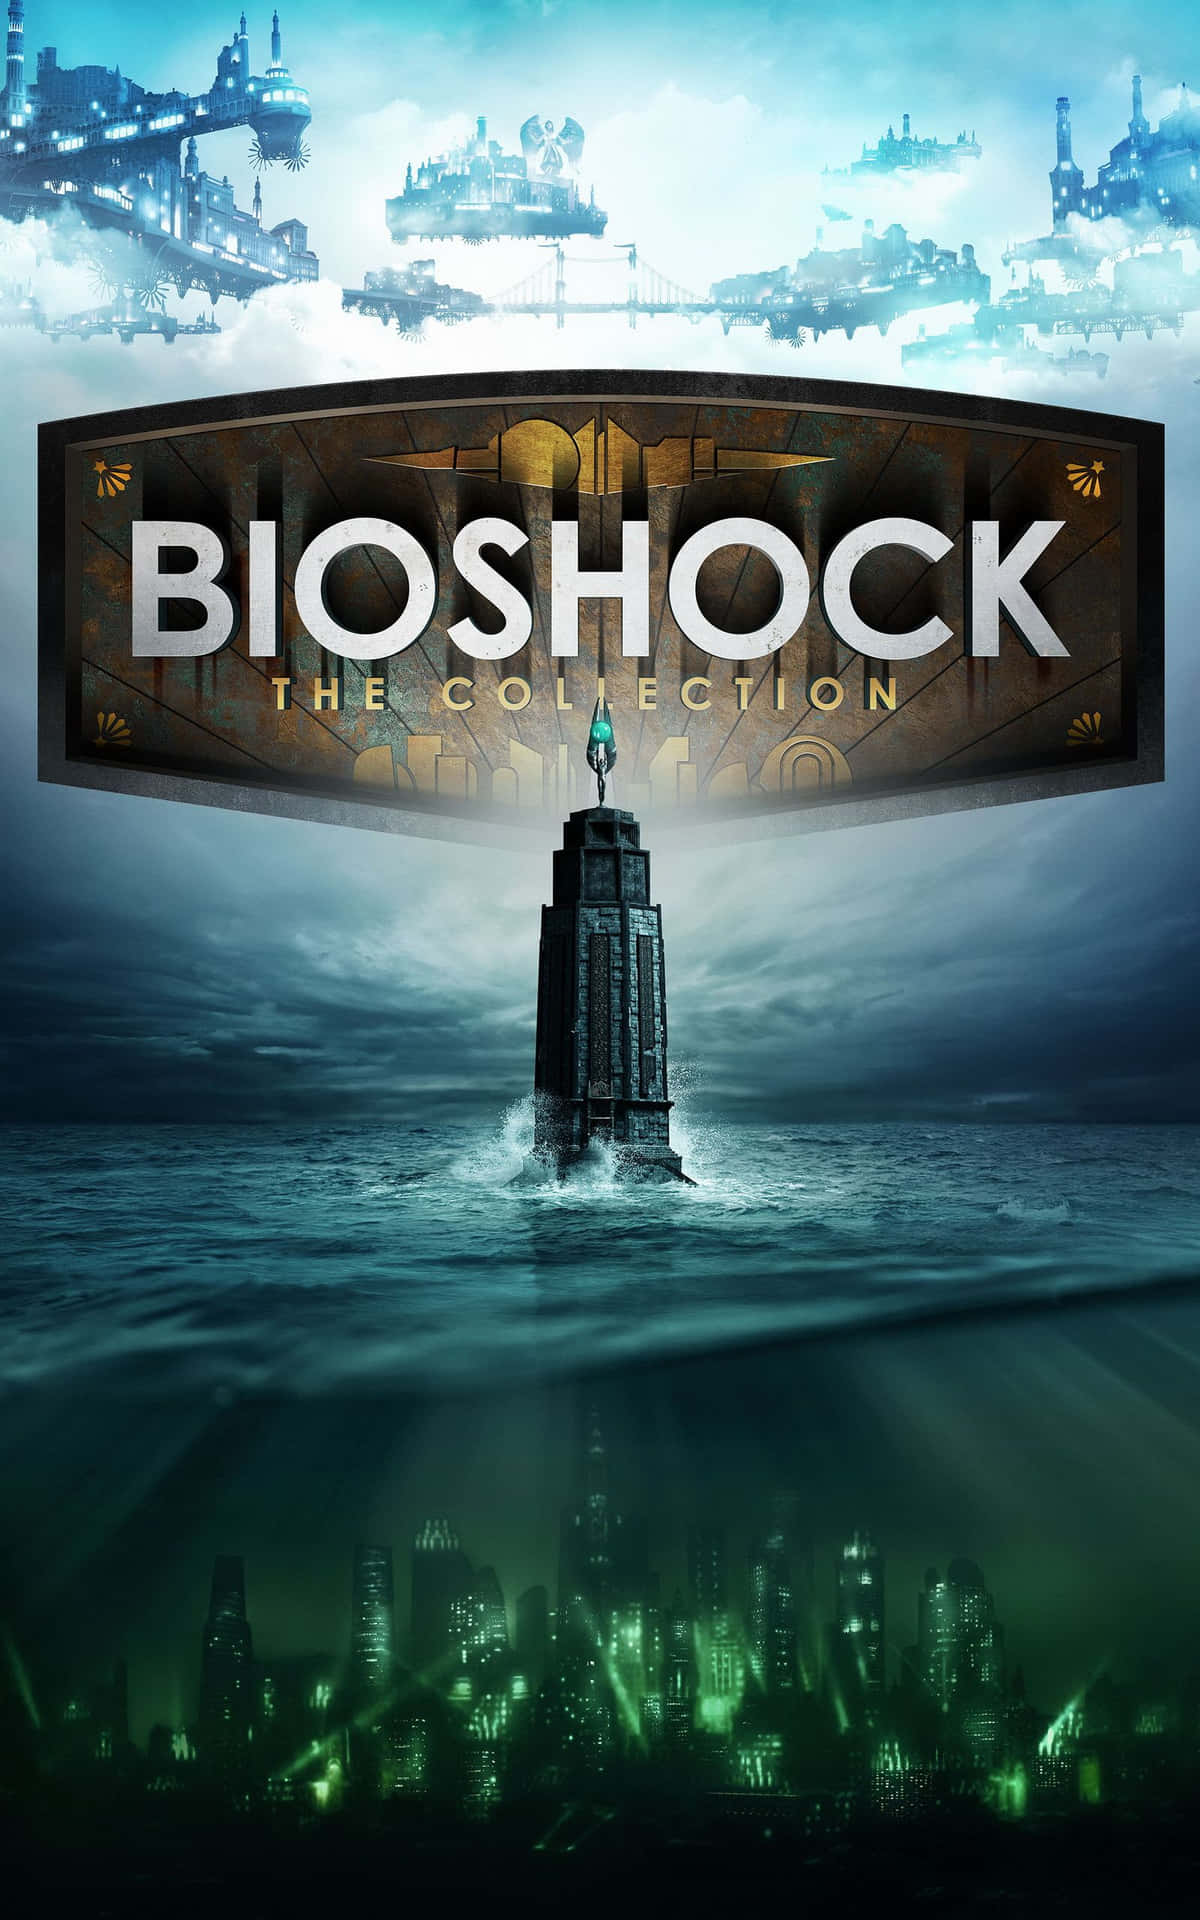 Free 4k Bioshock Iphone Wallpaper Downloads, [100+] 4k Bioshock Iphone  Wallpapers for FREE 